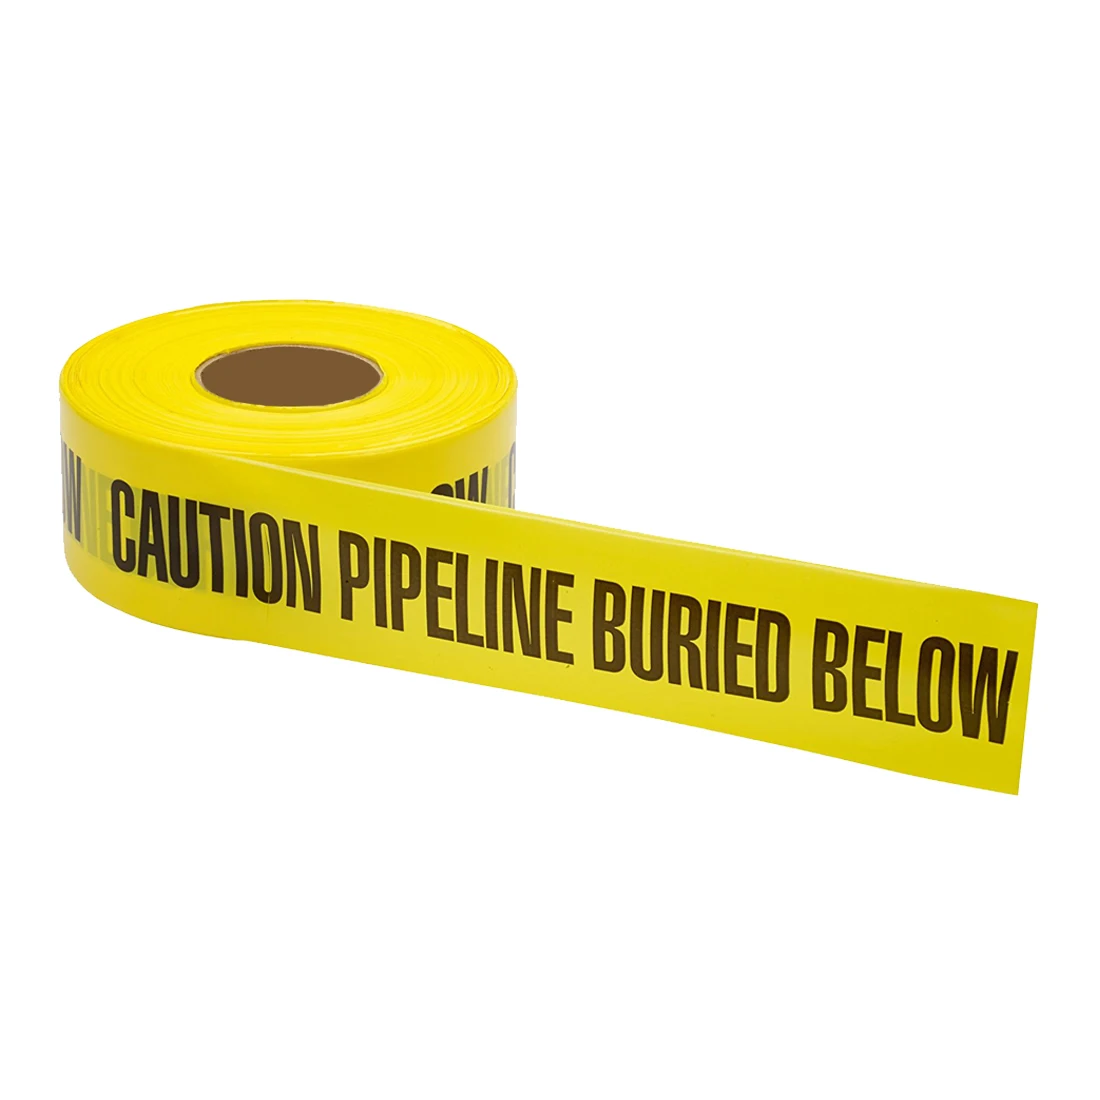 
EONBON Customized Electrical Warning Yellow Caution PE Warning Tape 